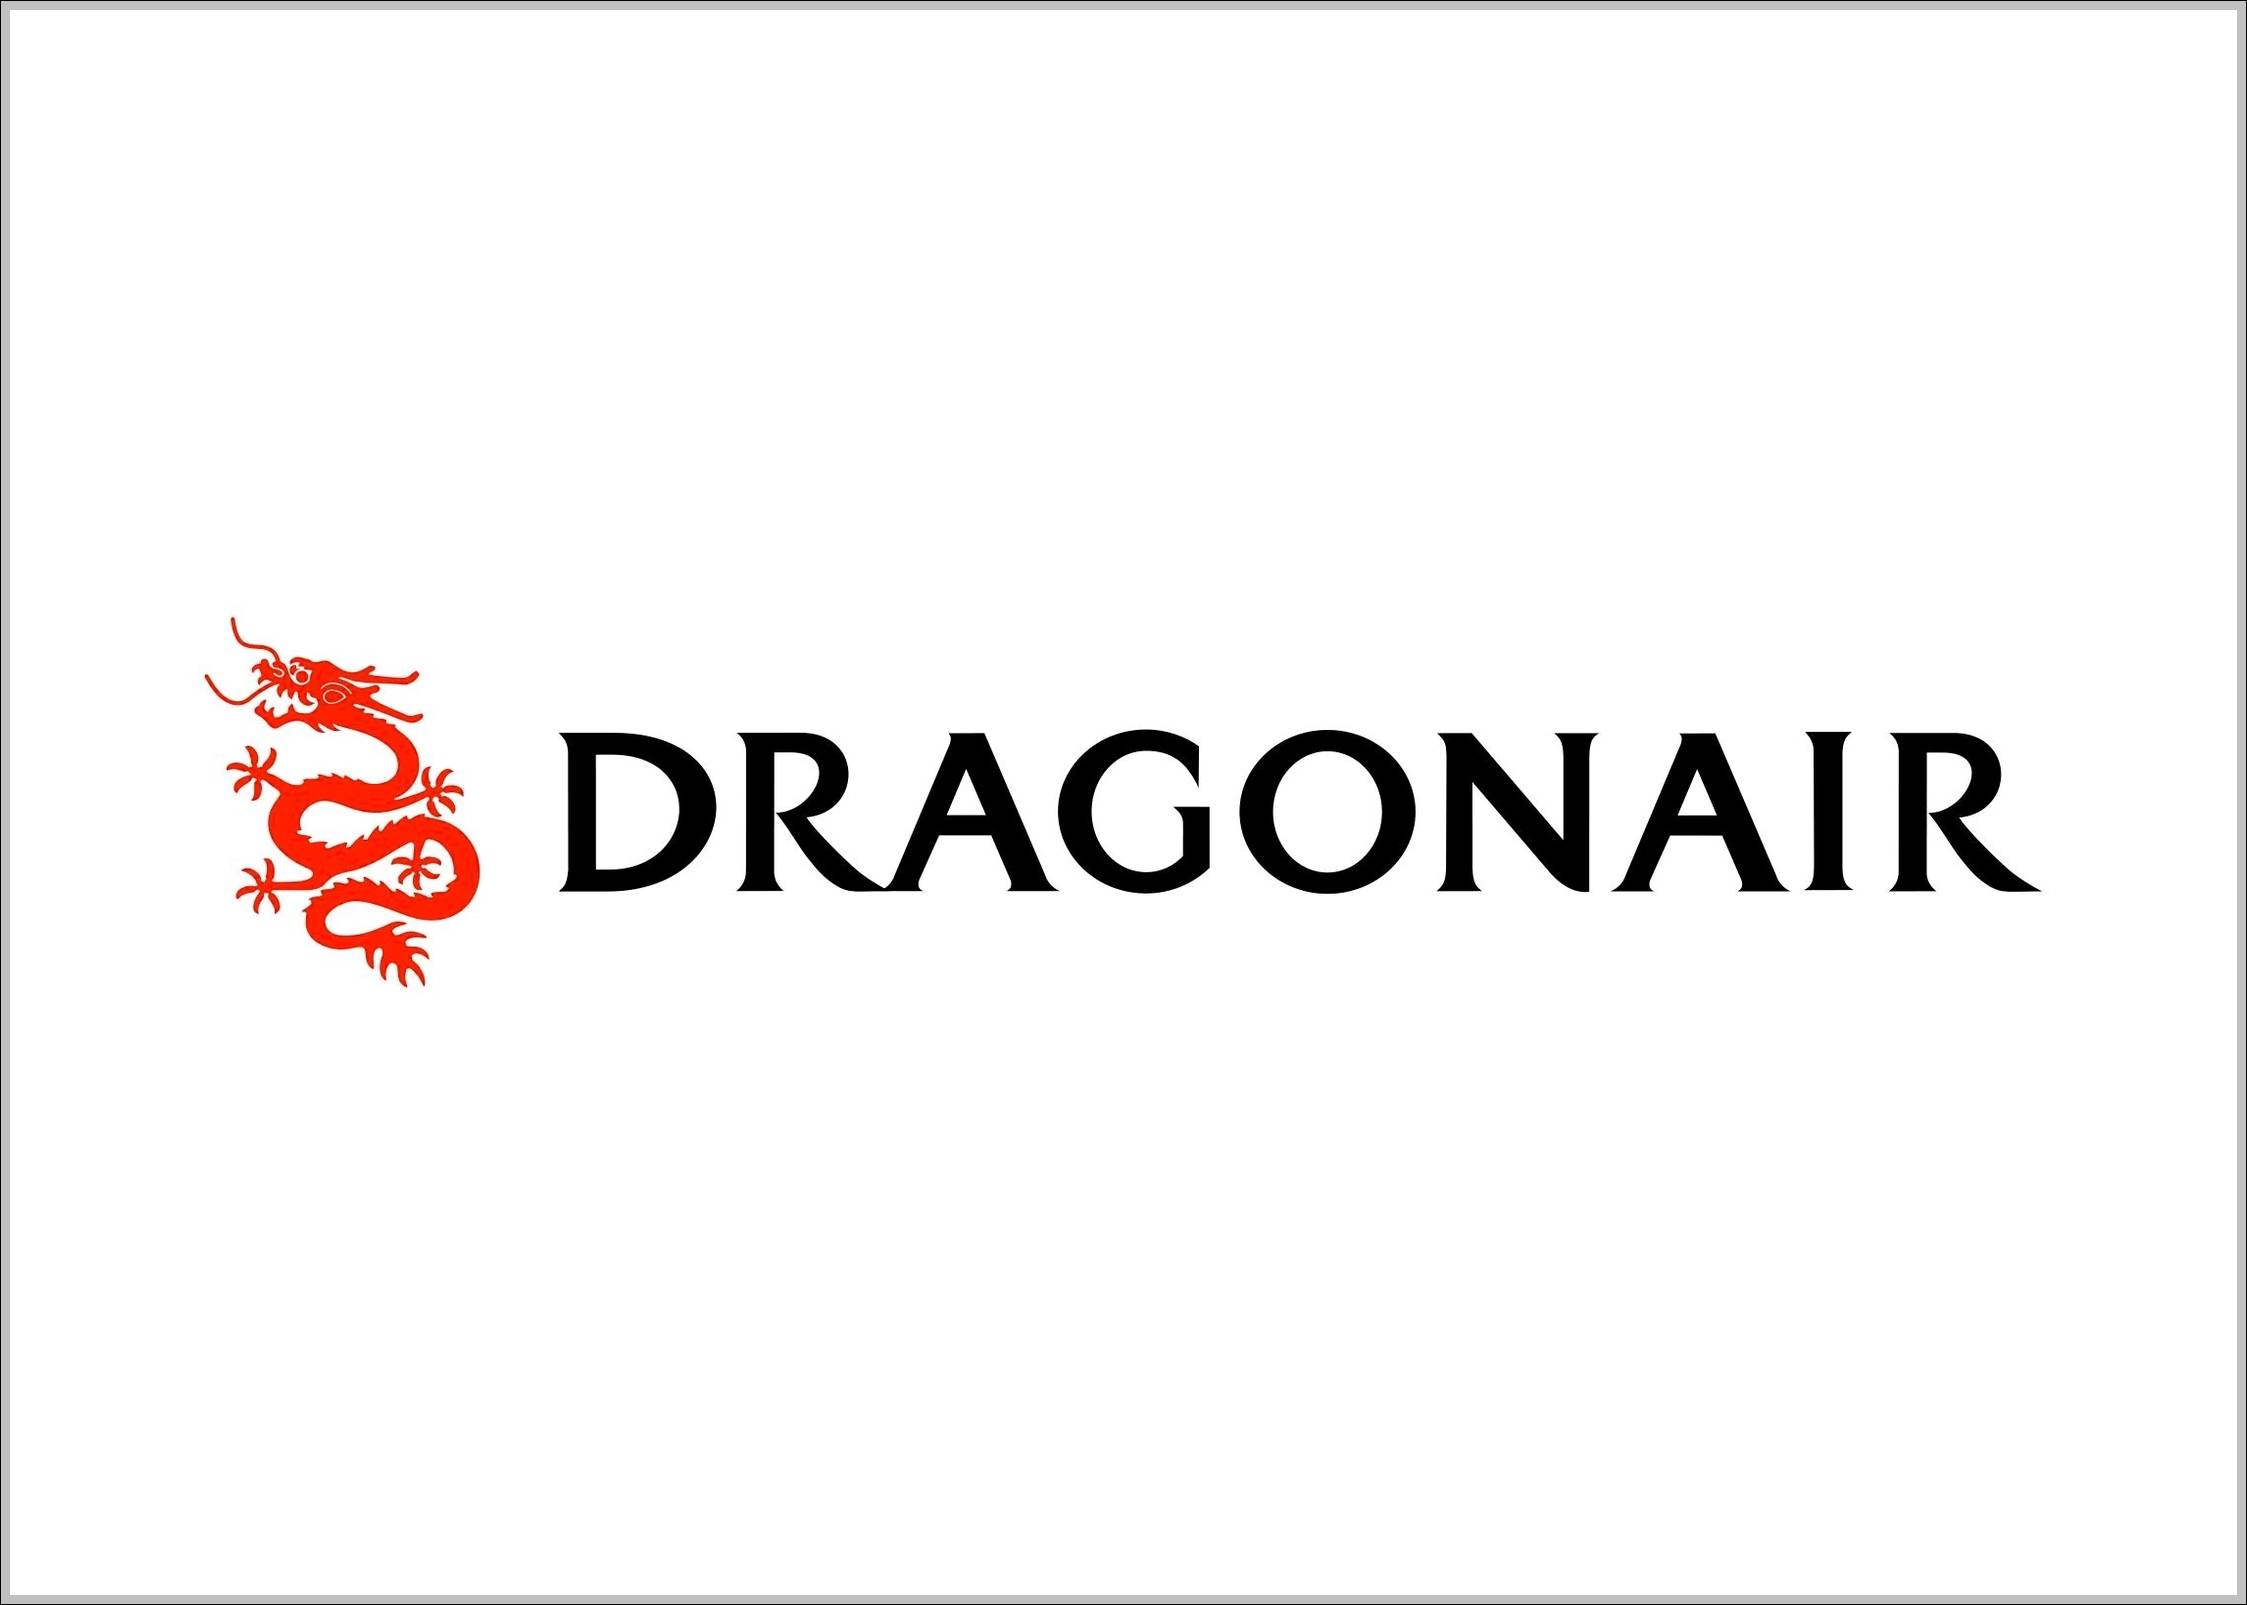 Dragonair sign